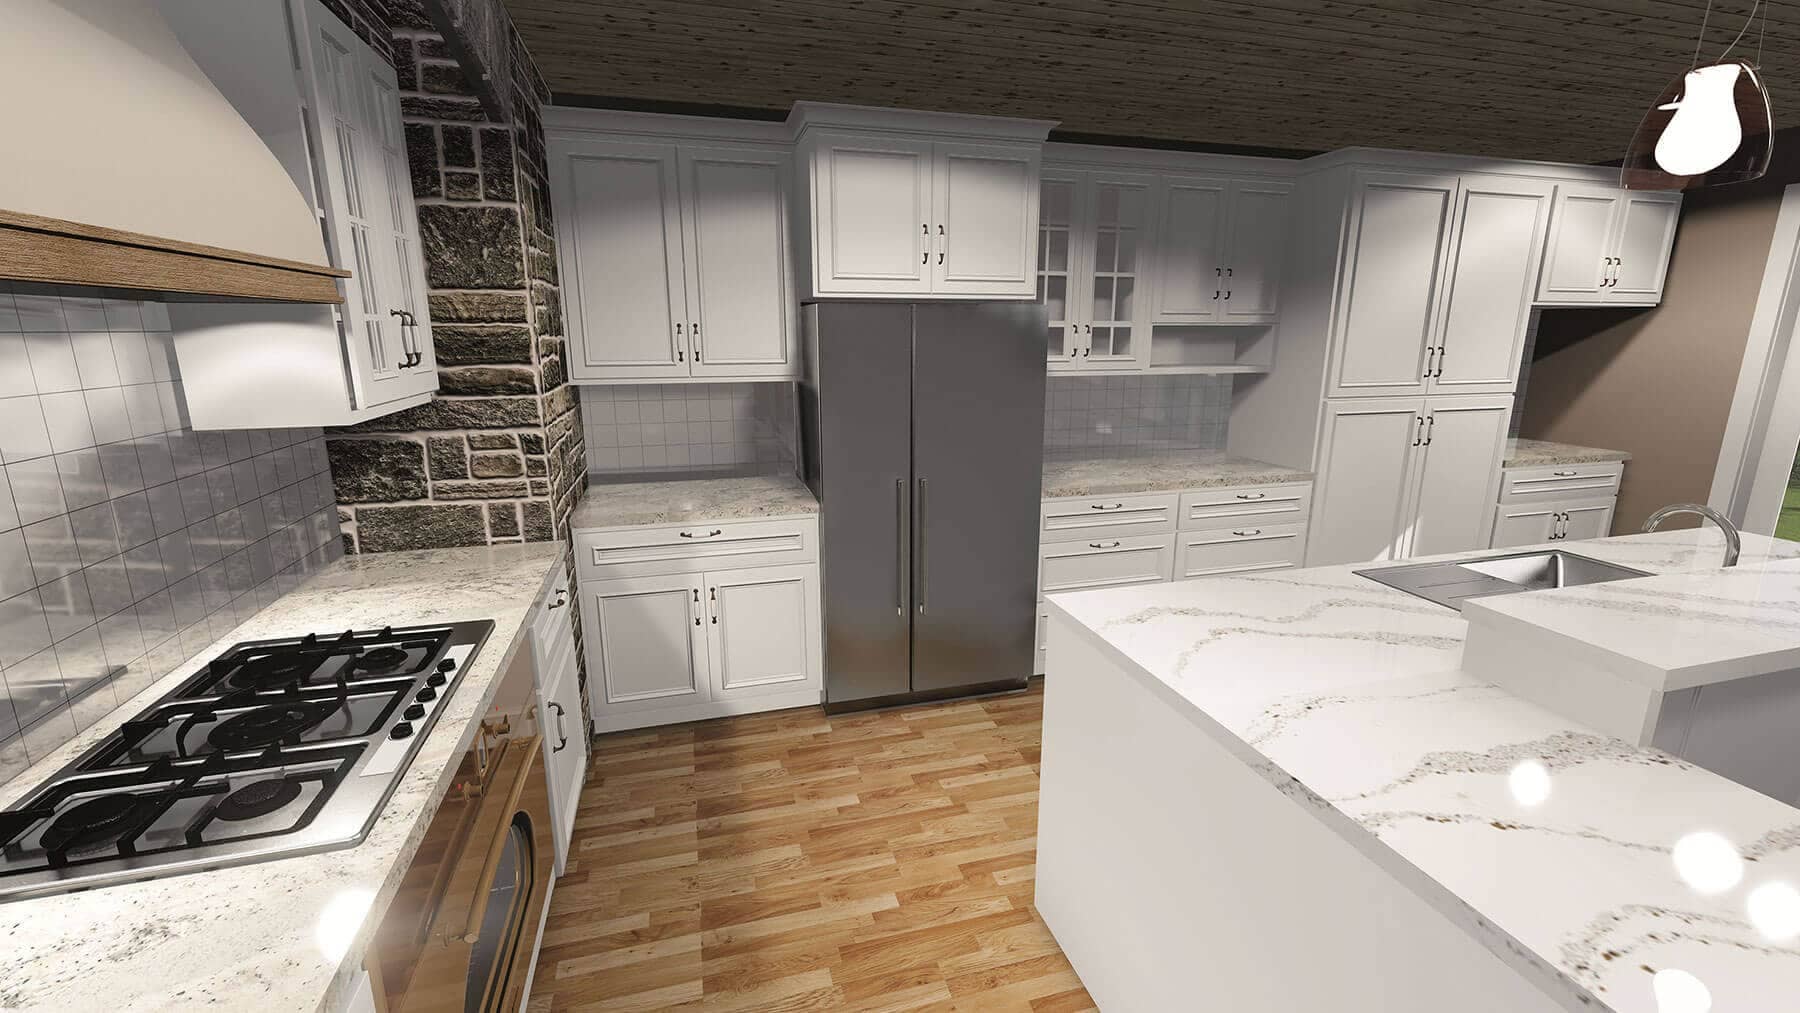 Highlighting-the-cabinets-plus-fridge-stove